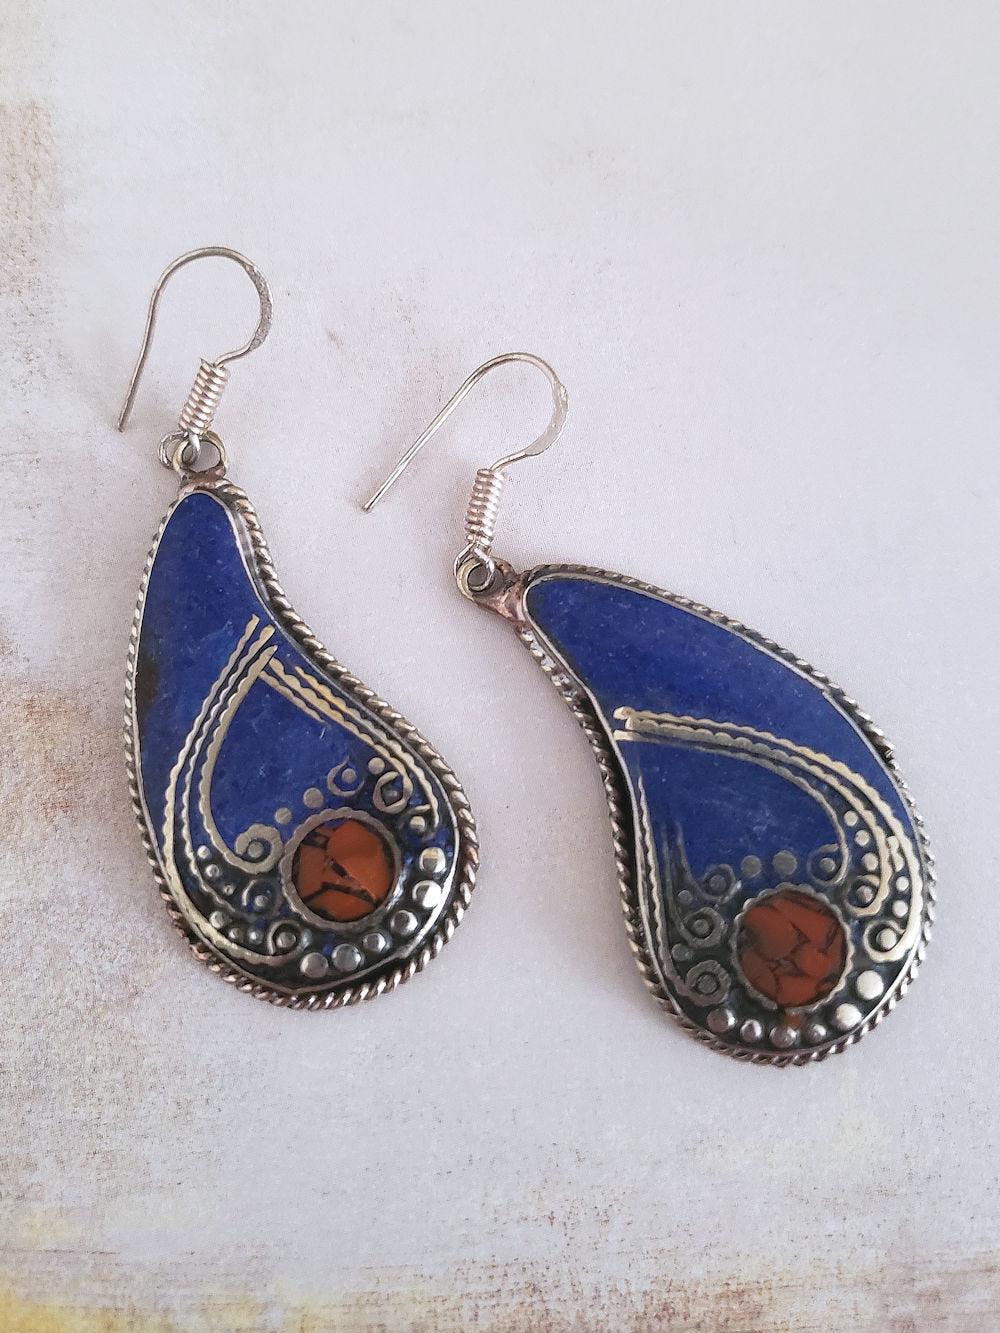 Tibet Earrings - Lapis or Turquoise Paisleys - Summer Indigo 